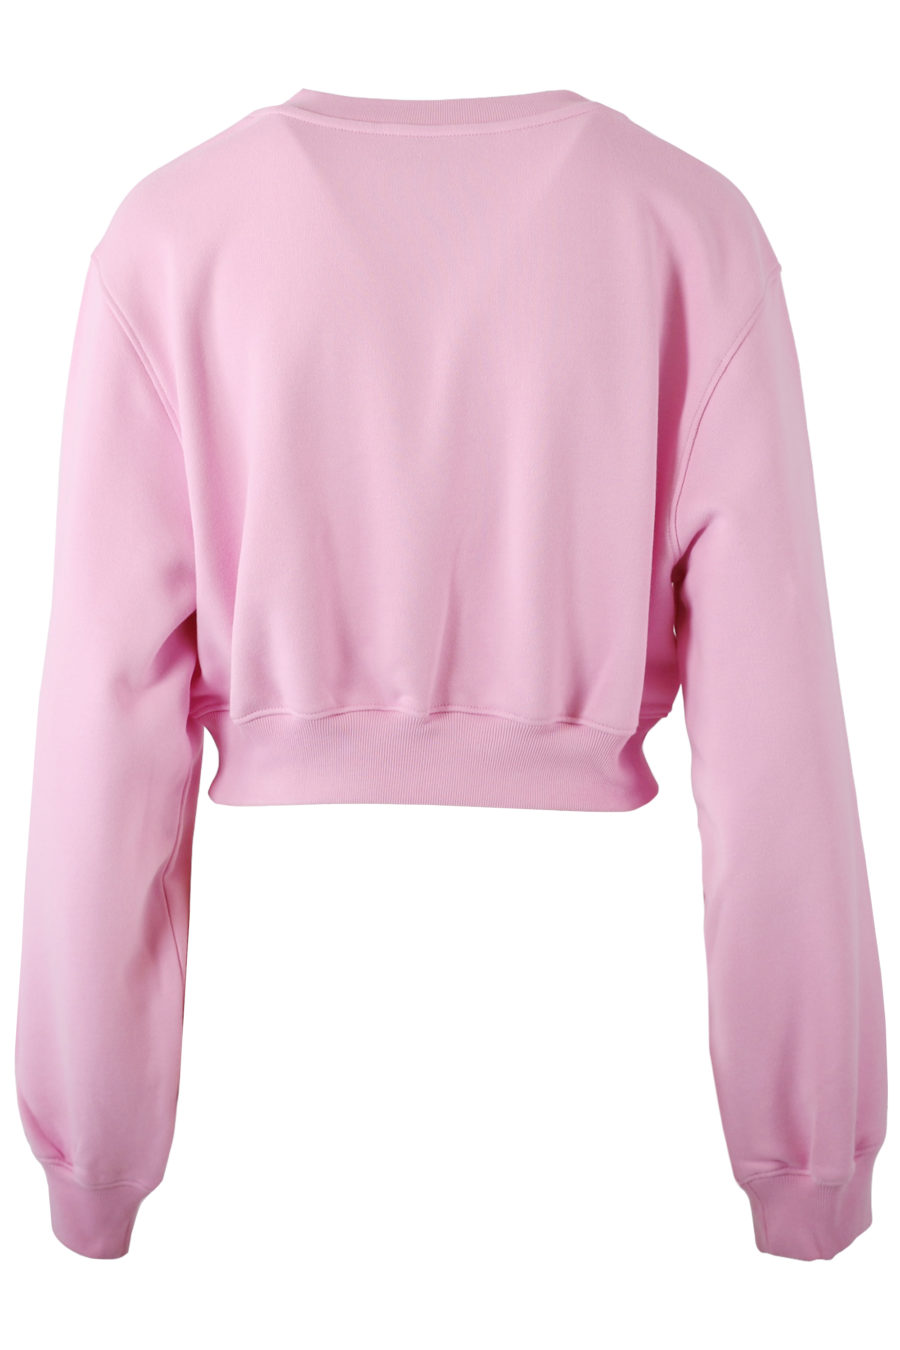 Rosa Sweatshirt mit glänzendem Logo - IMG 7169 copy